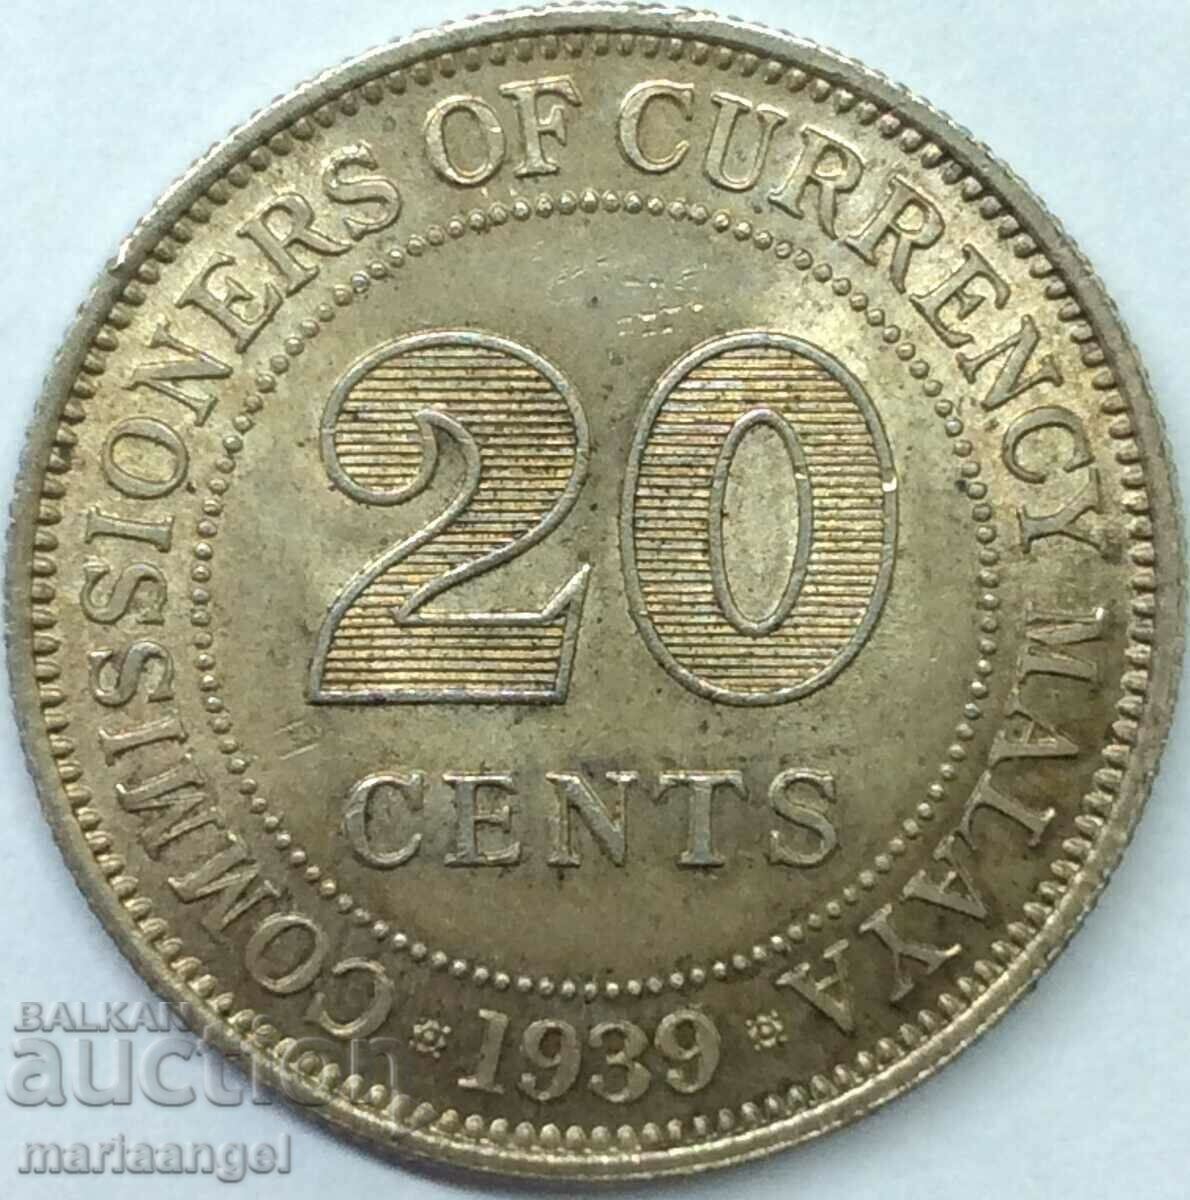 Straits Settlementc 20 centesimi 1939 ασημένια χρυσή πατίνα